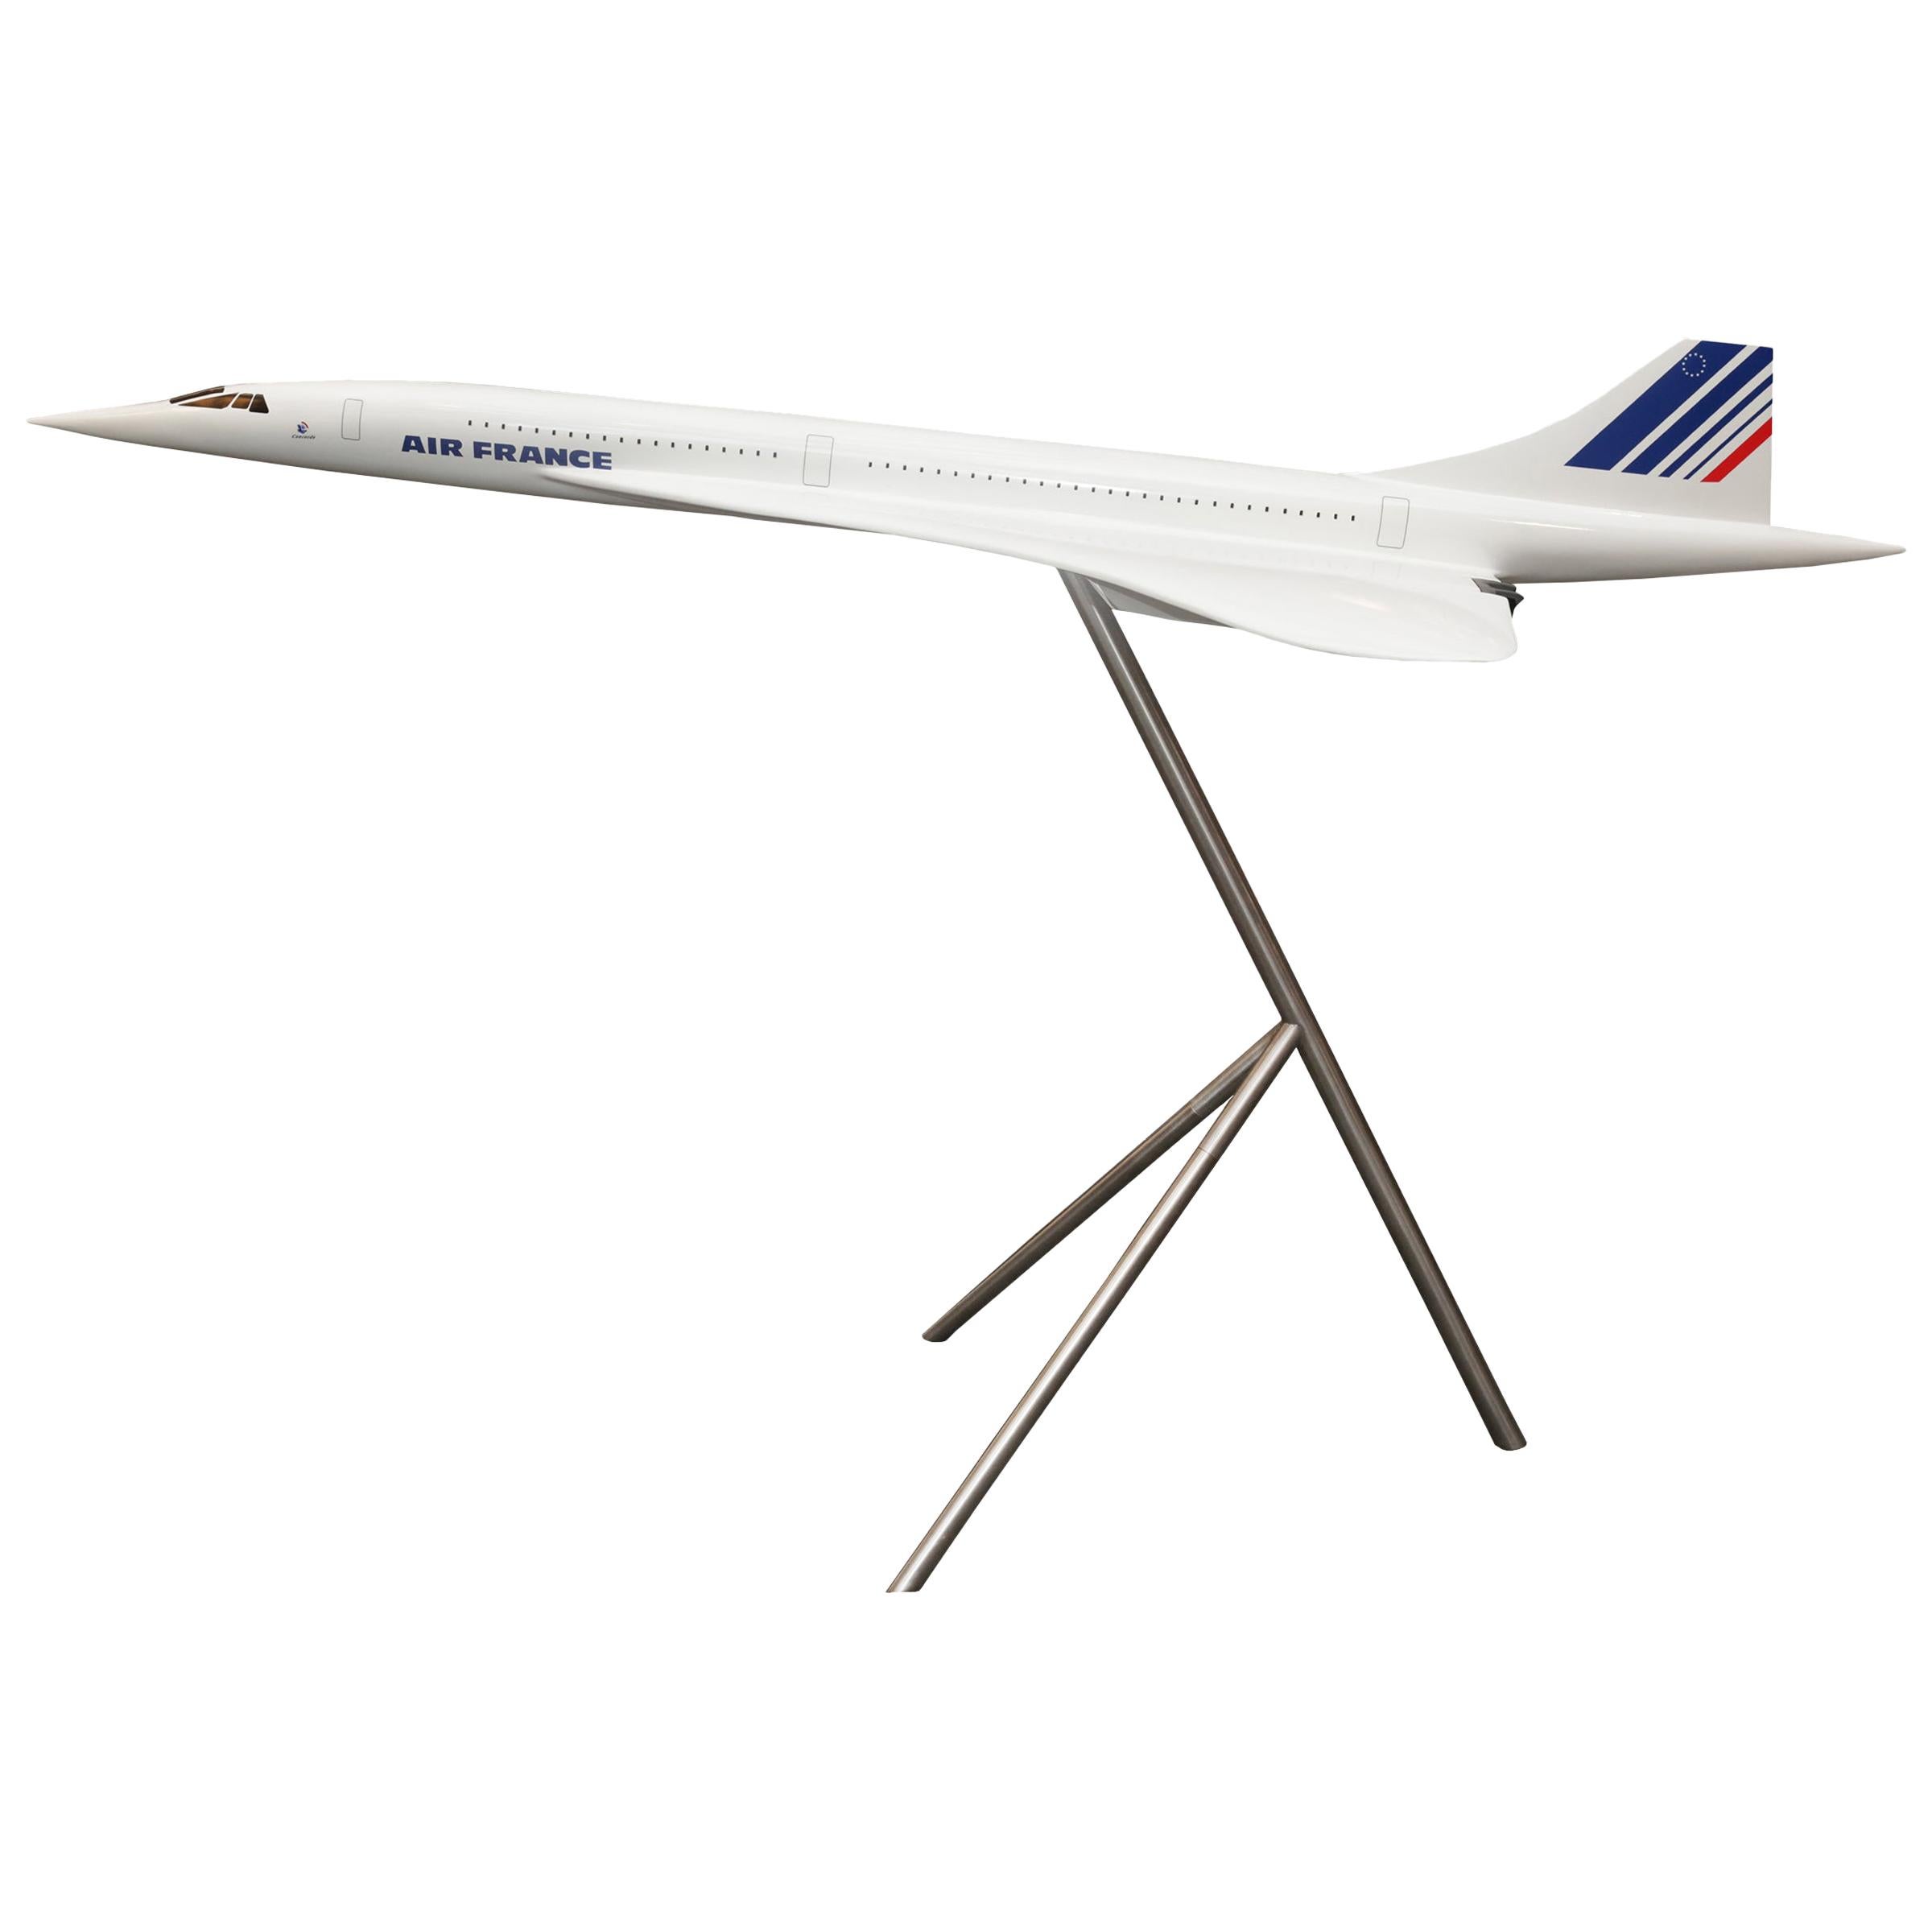 Sculpture Concorde Model Scale 1/36 For Sale